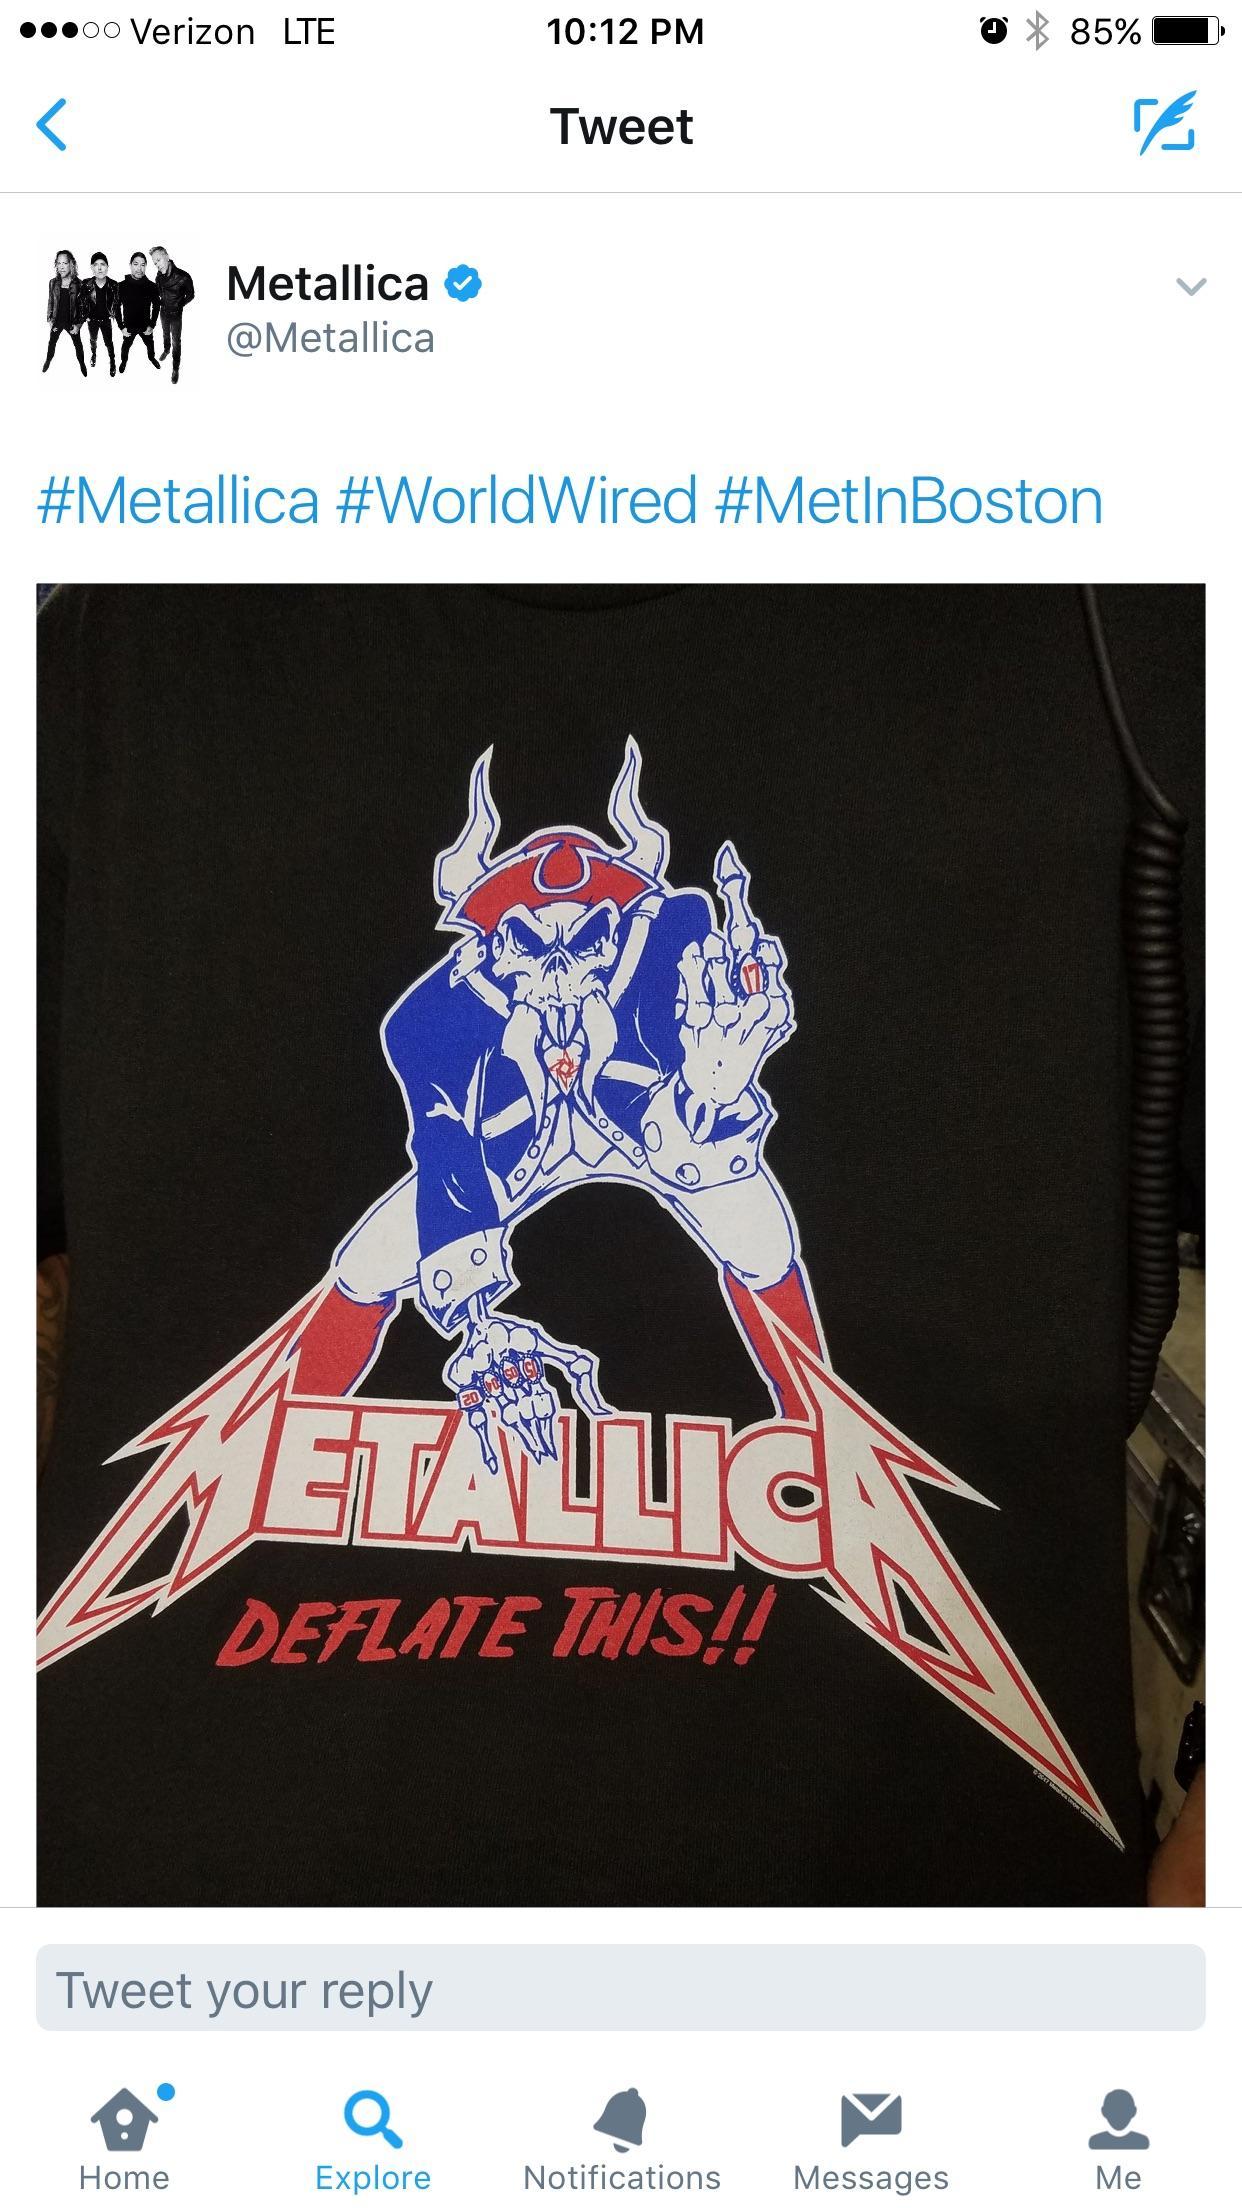 Deflate Logo - Shirt from tonight's Metallica show